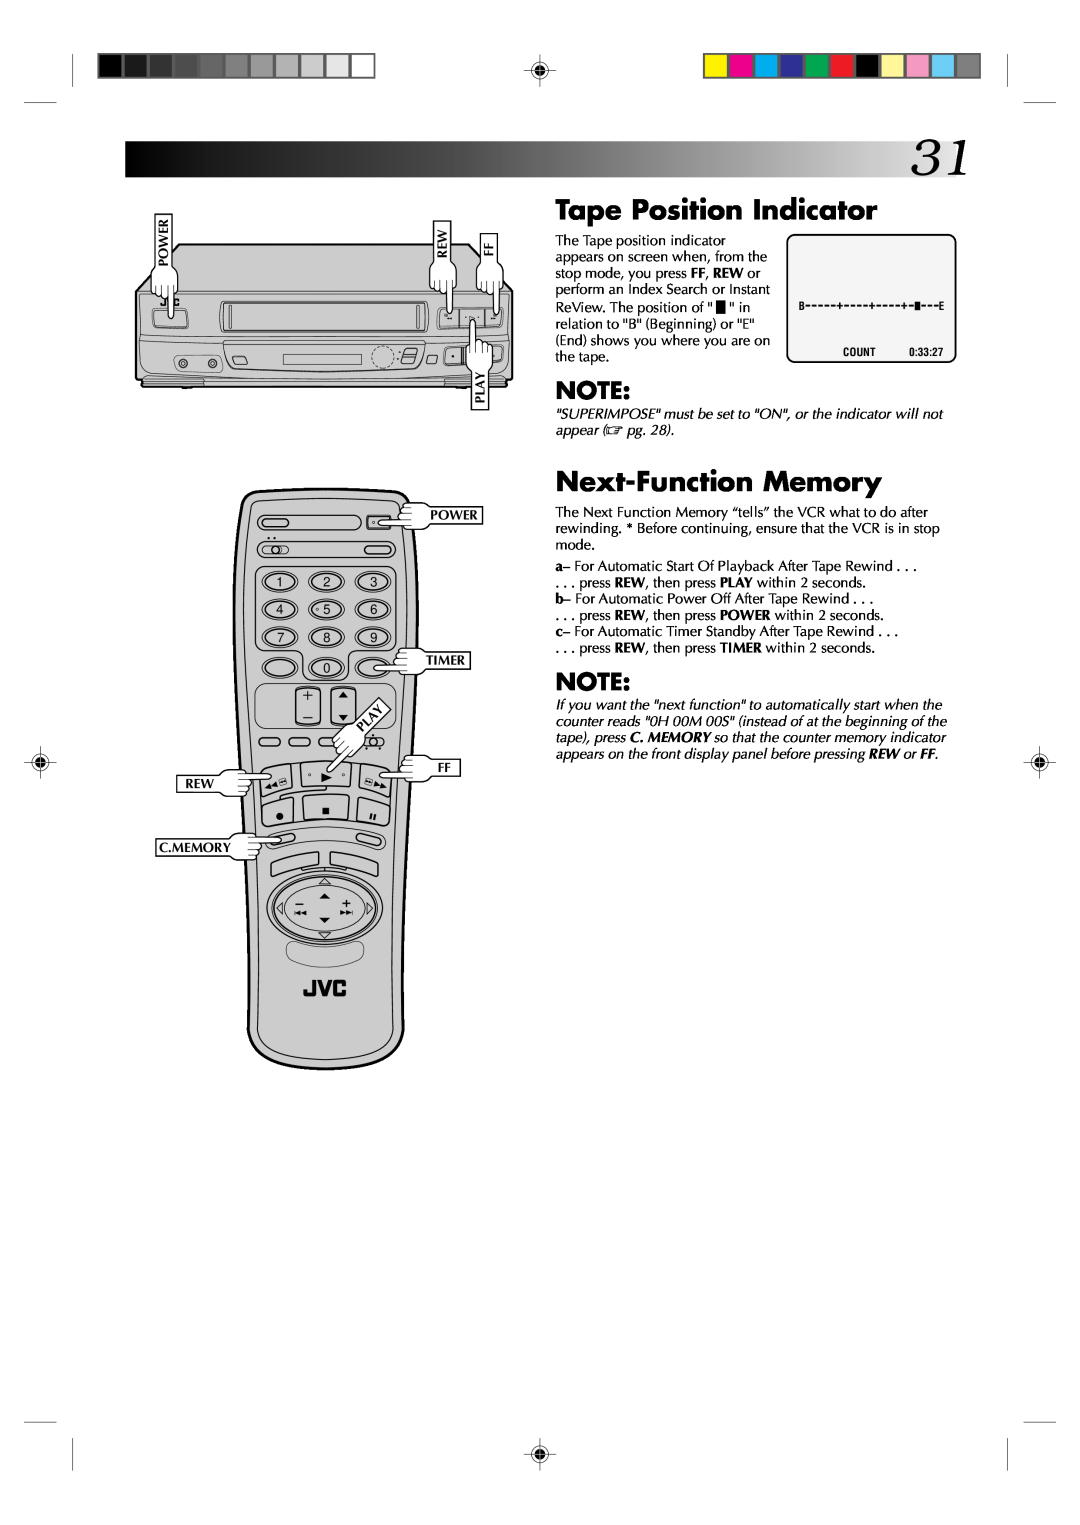 JVC HR-VP434U manual Tape Position Indicator, Next-Function Memory 